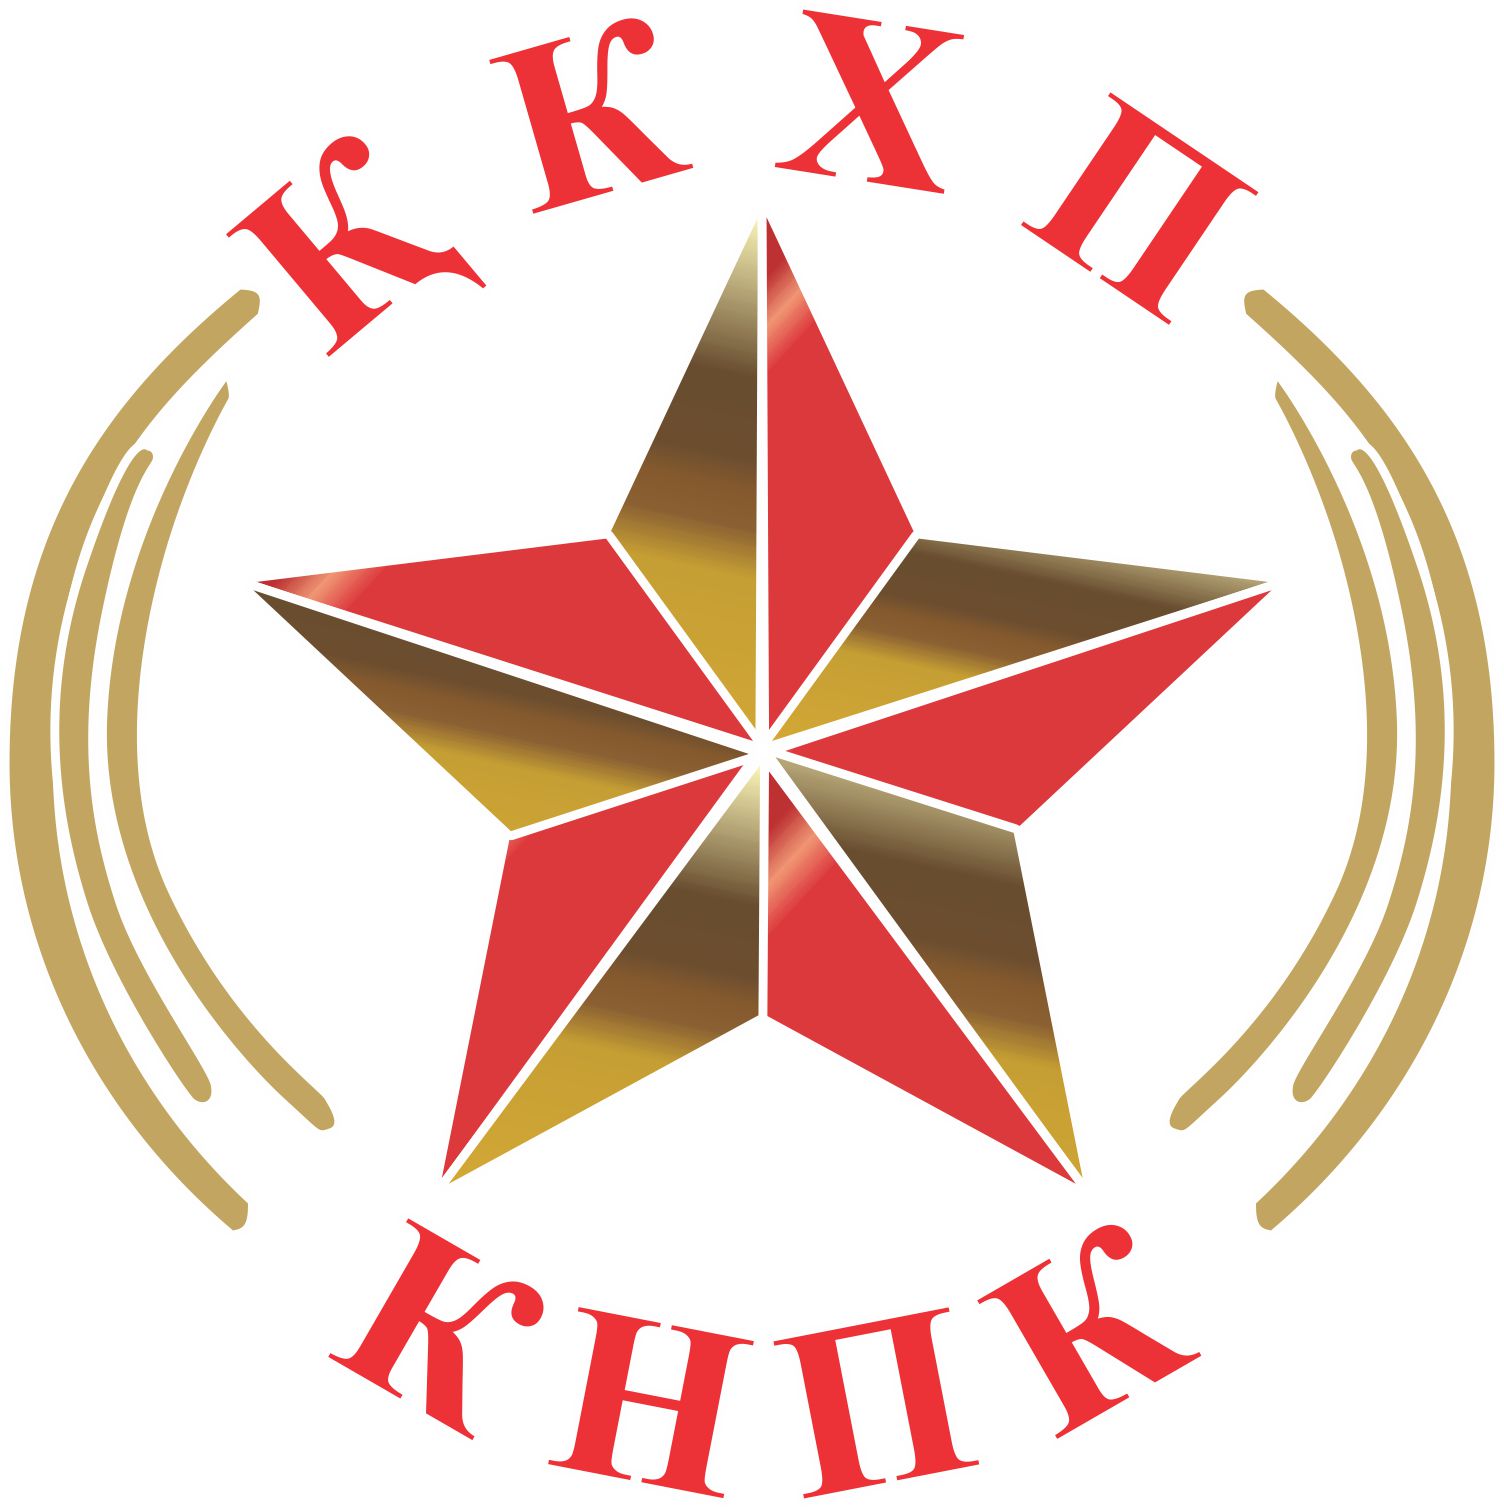 logotip-knpk